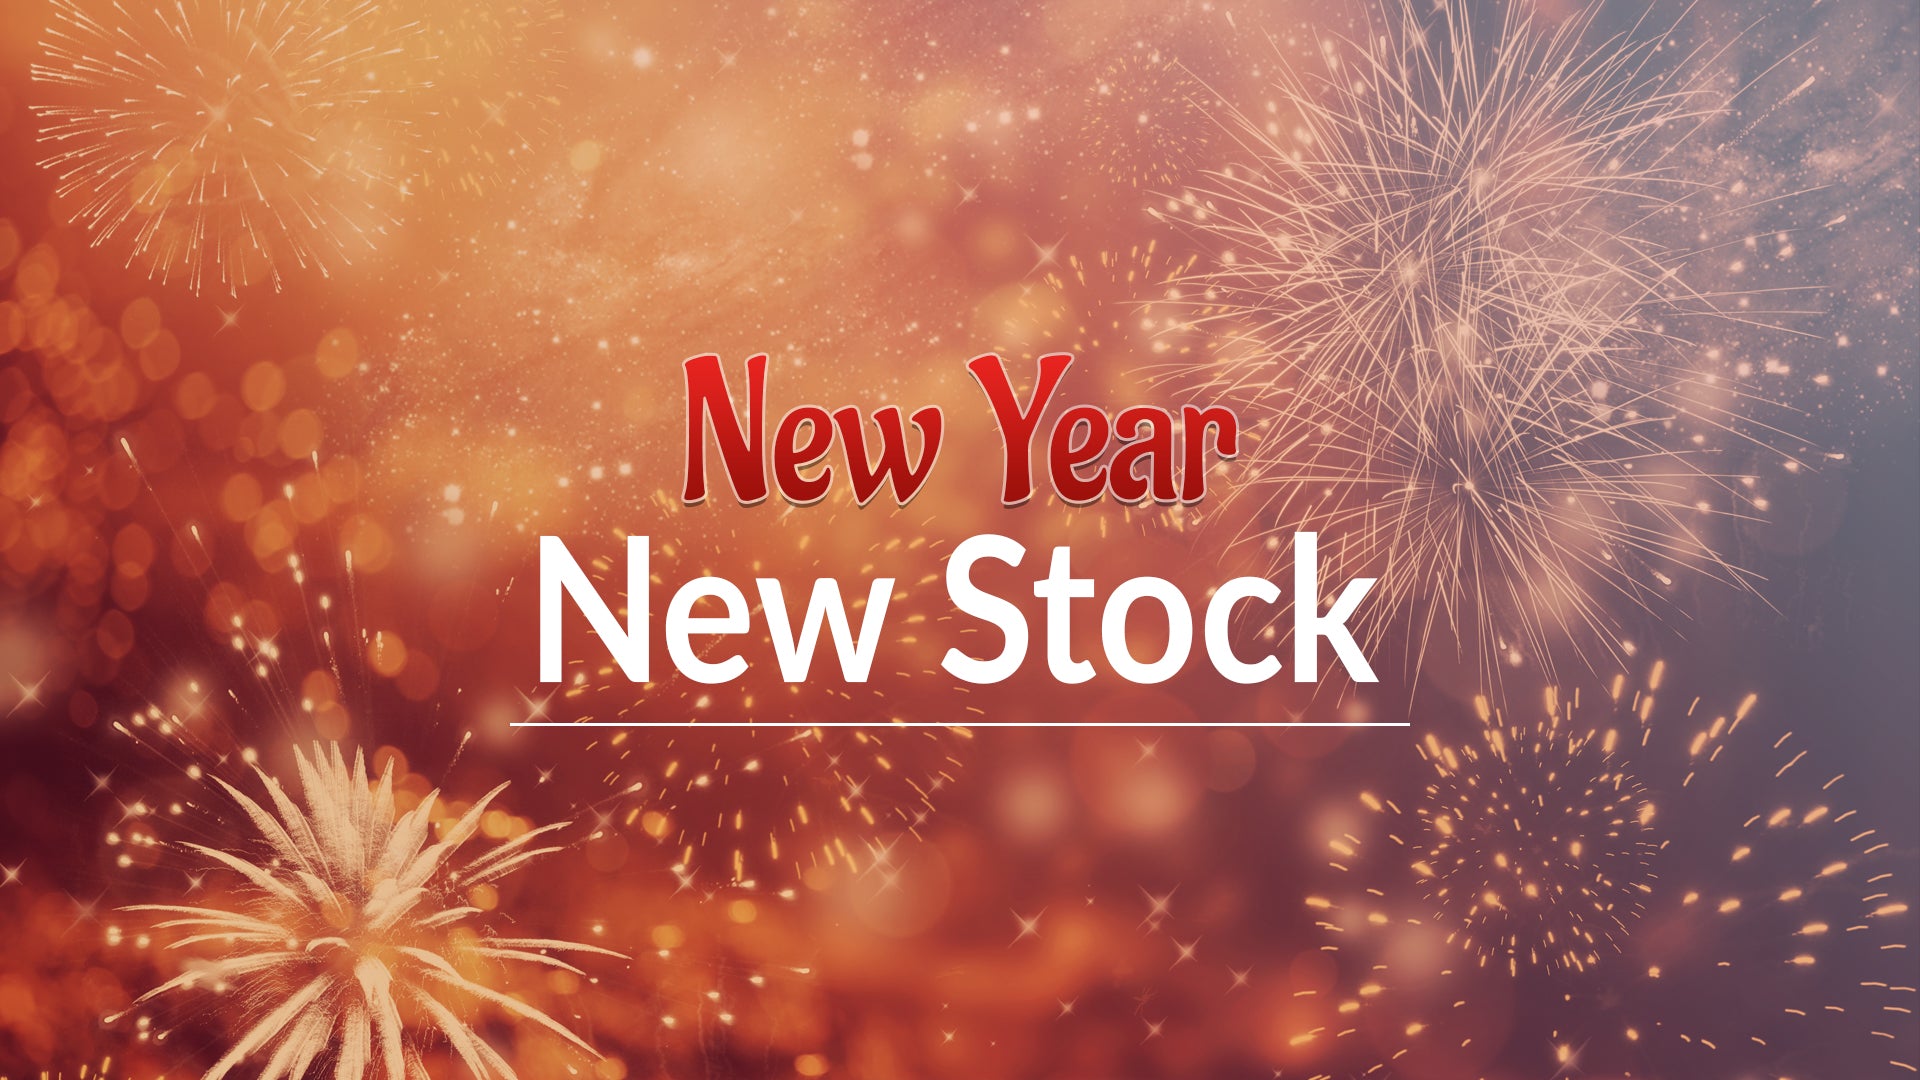 new year new stock whizley